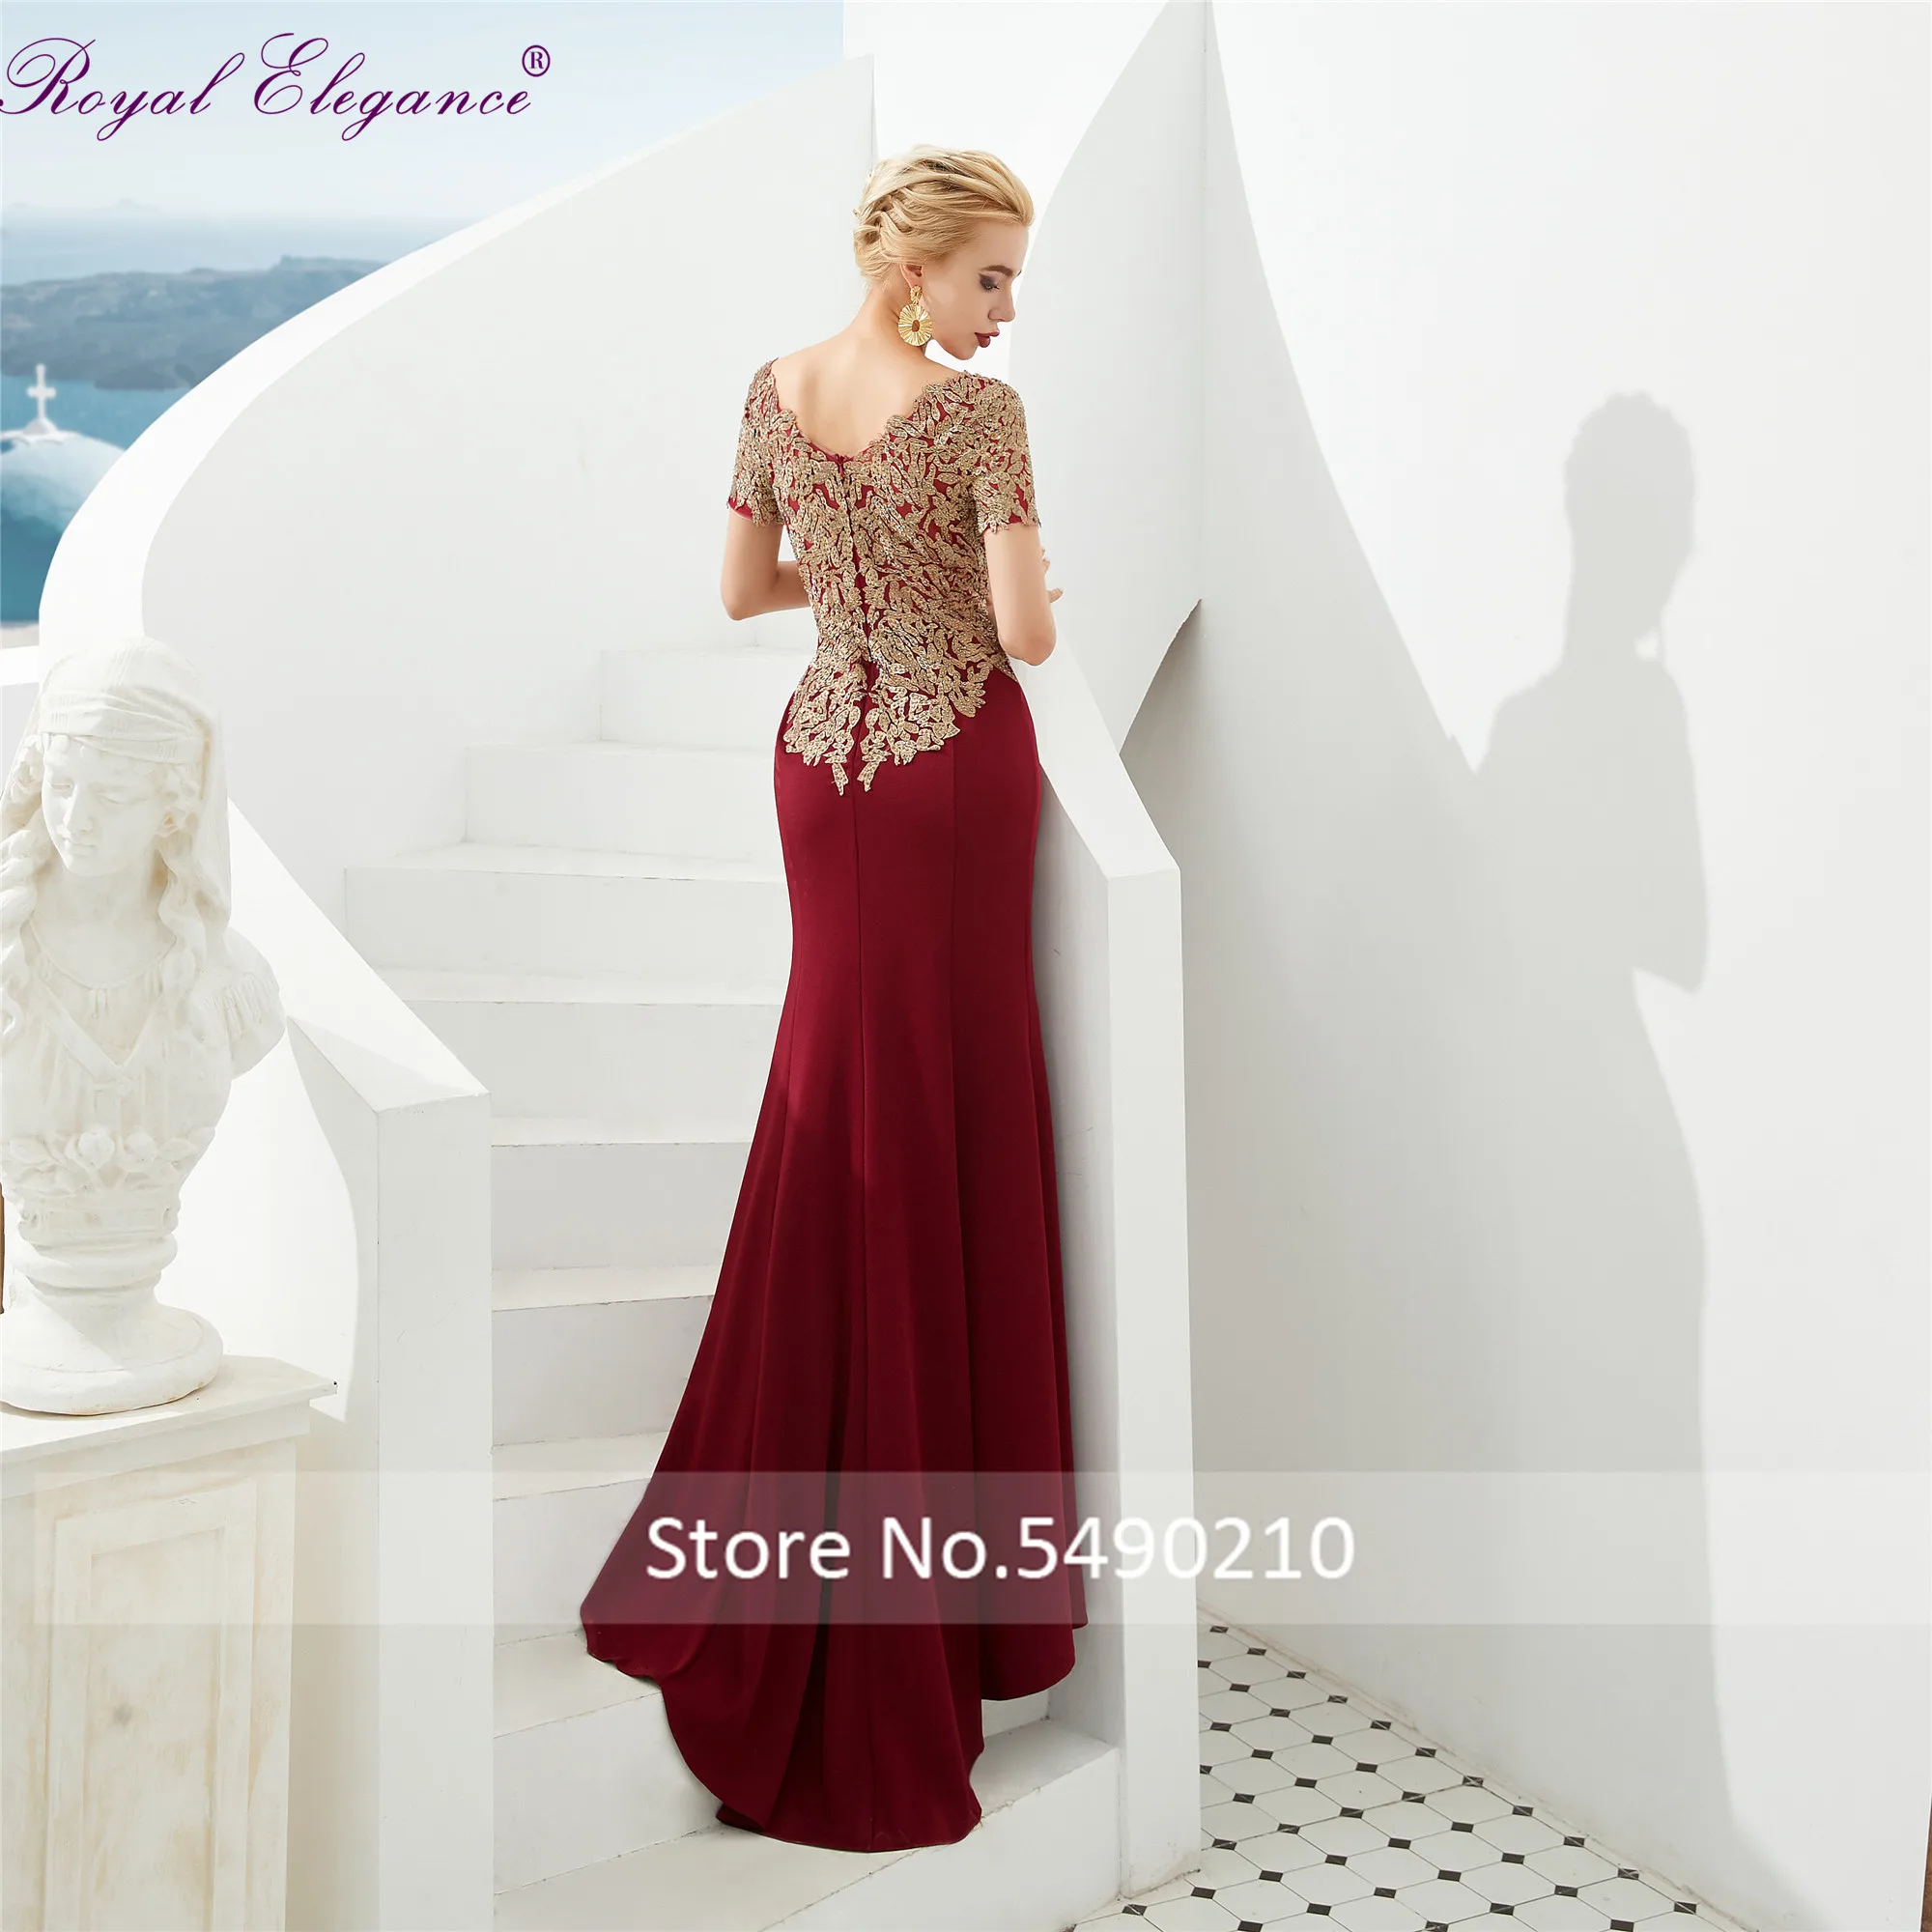 

Royal Elegance Short Sleeve Scoop Neckline Crepe Gold Lace Mermaid Evening Dress vestido de festa Elastic Prom dress